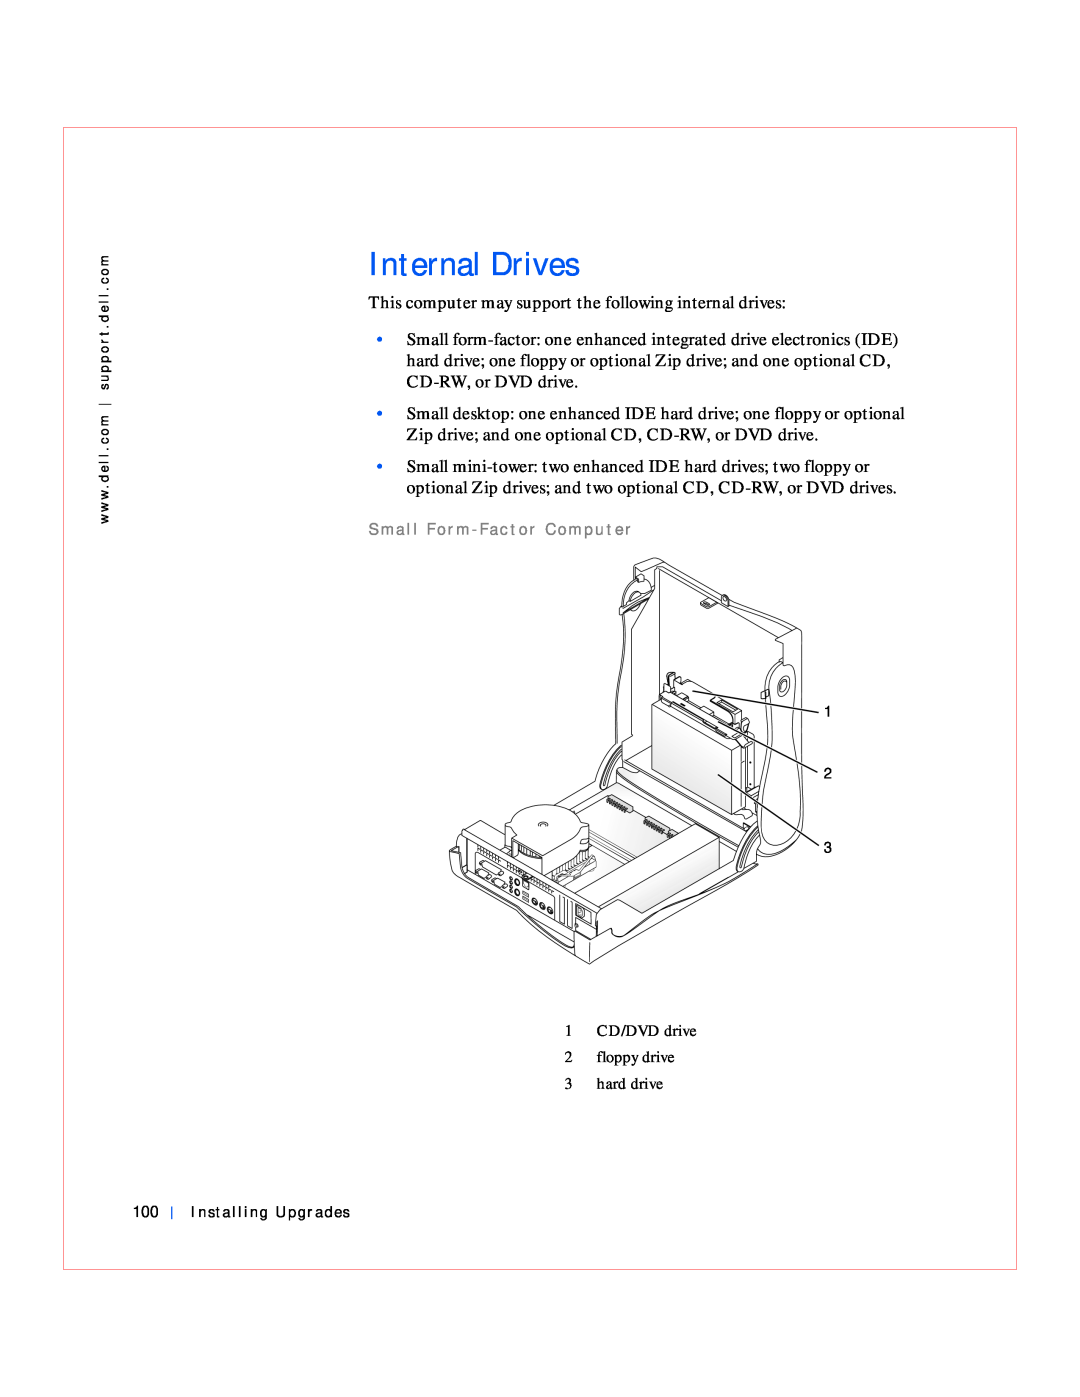 Dell GX240 manual Internal Drives, 1 2 3, Installing Upgrades 